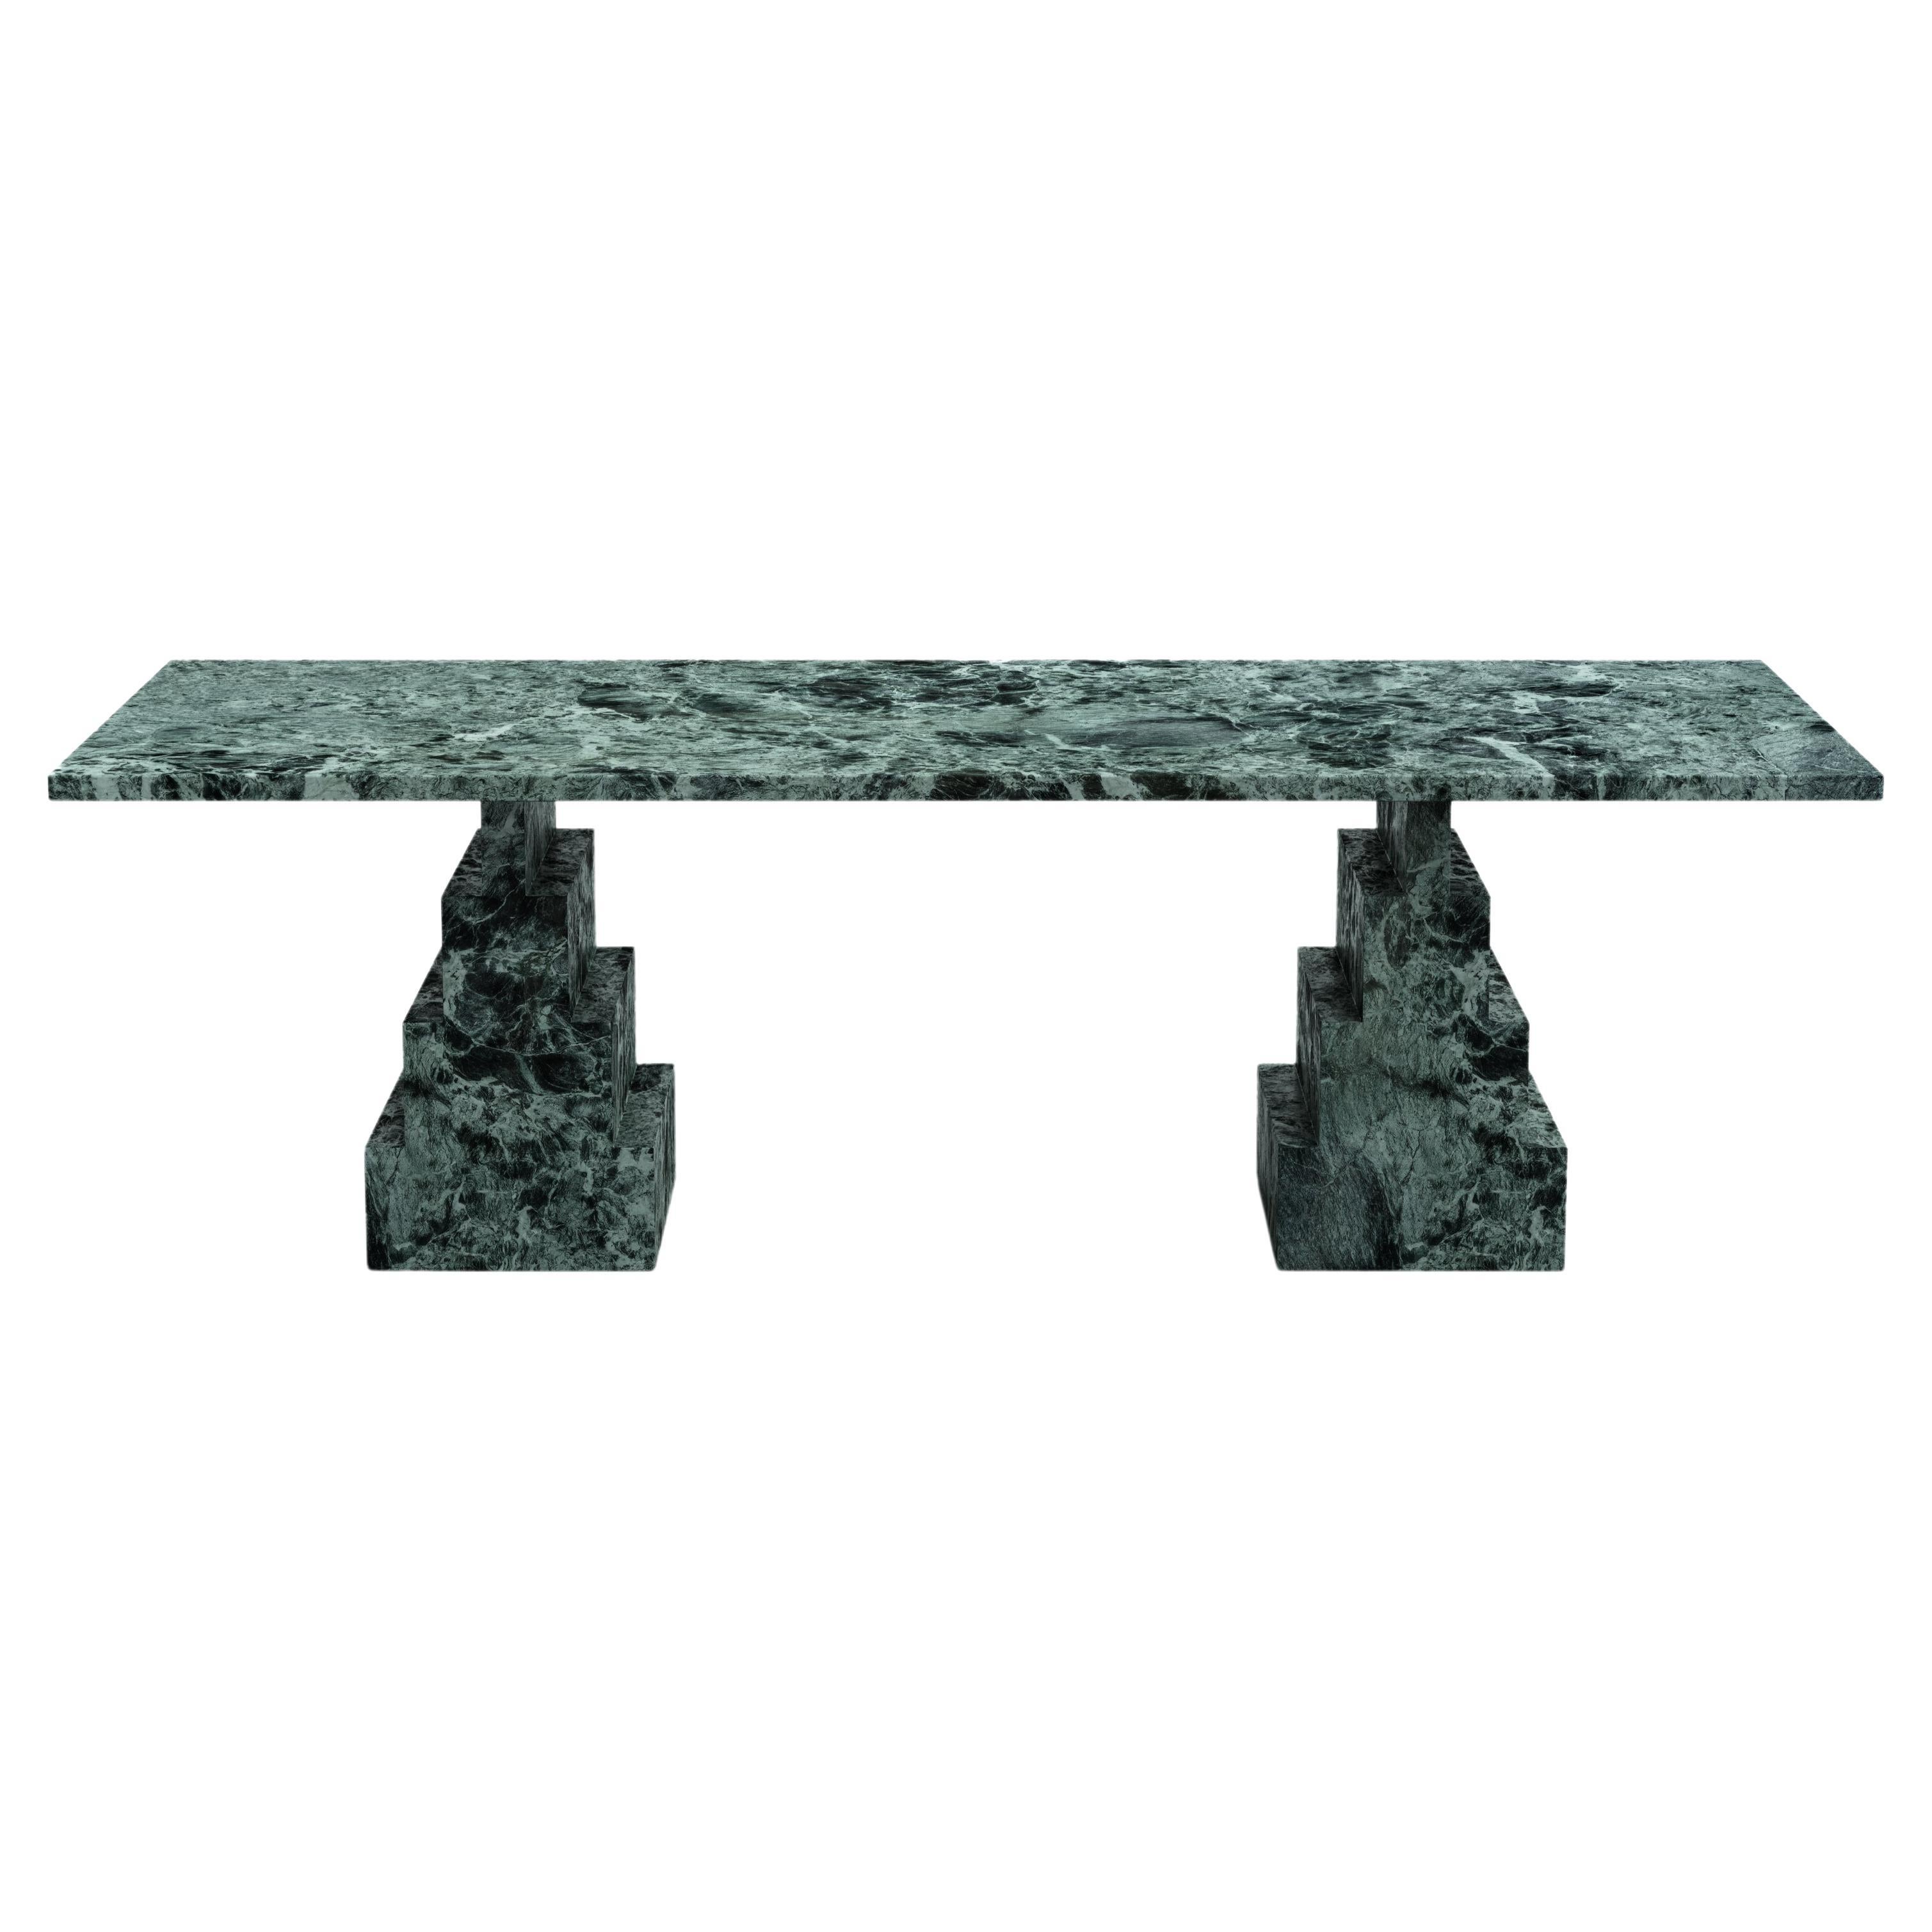 NORDST NIKO Dining Table, Italian Green Marble, Danish Modern Design, New For Sale